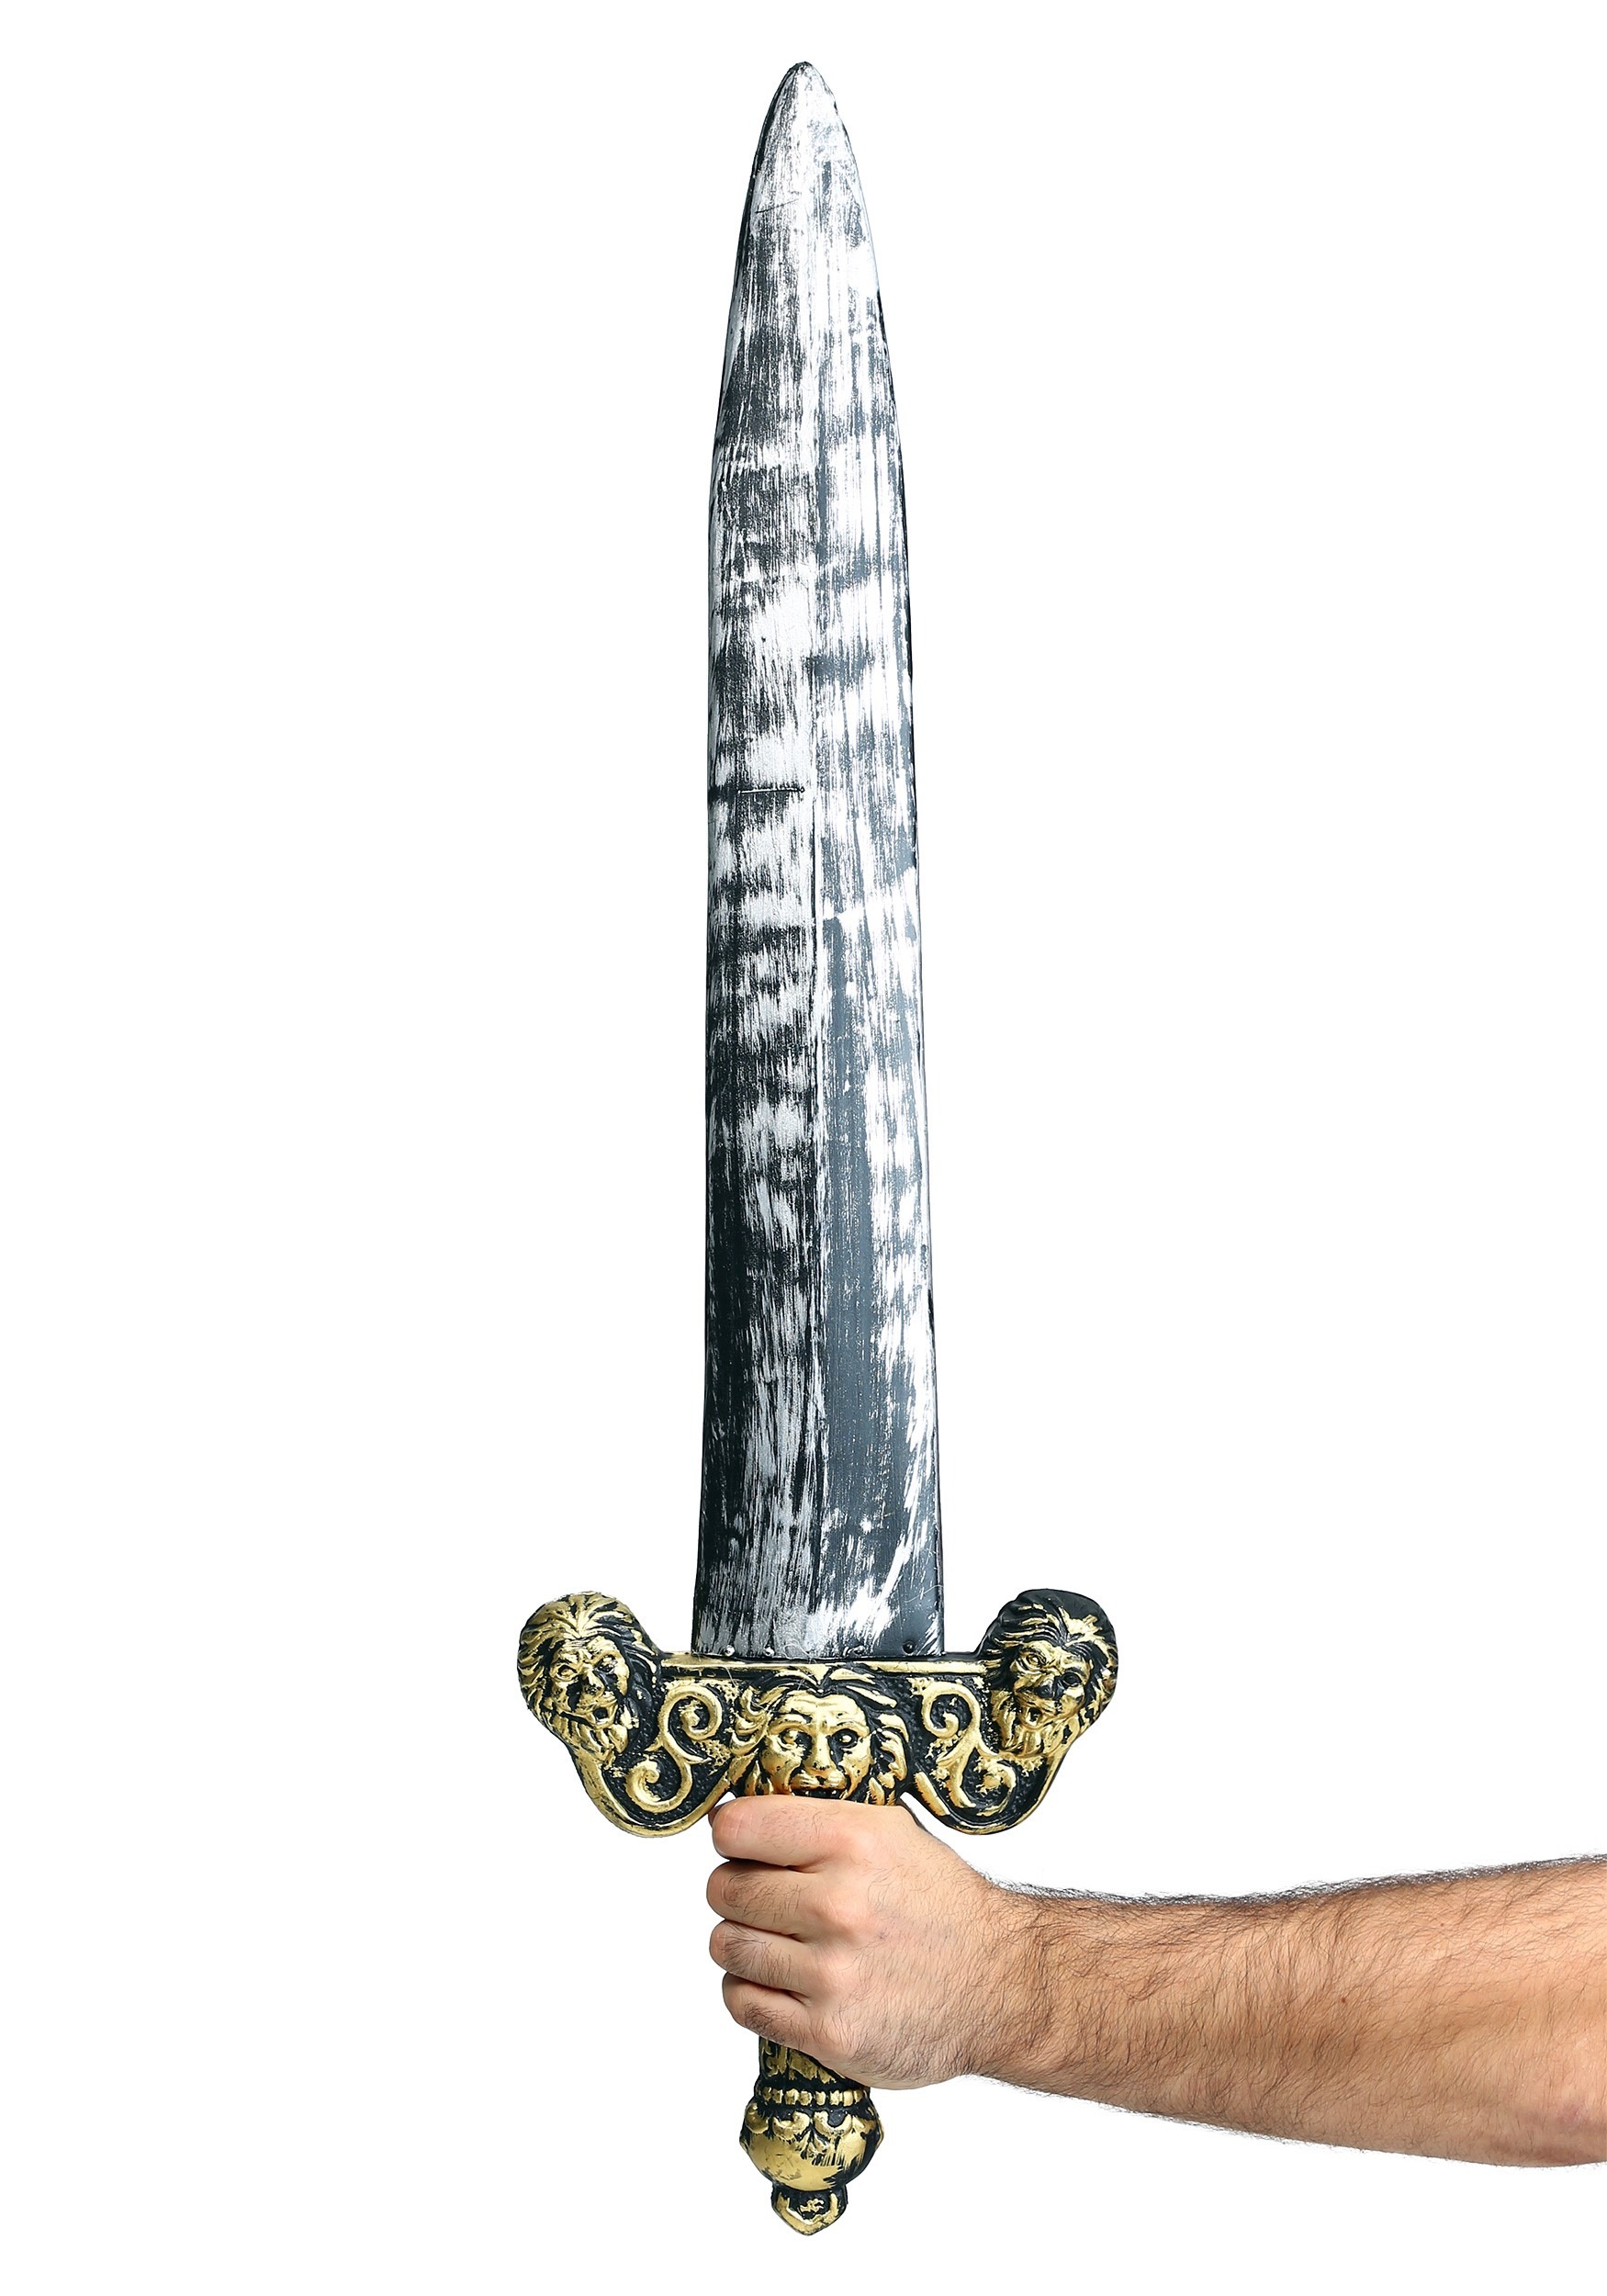 20 Gladiator Shield W/ 29 Sword Prop Set , Roman Toy Weapons